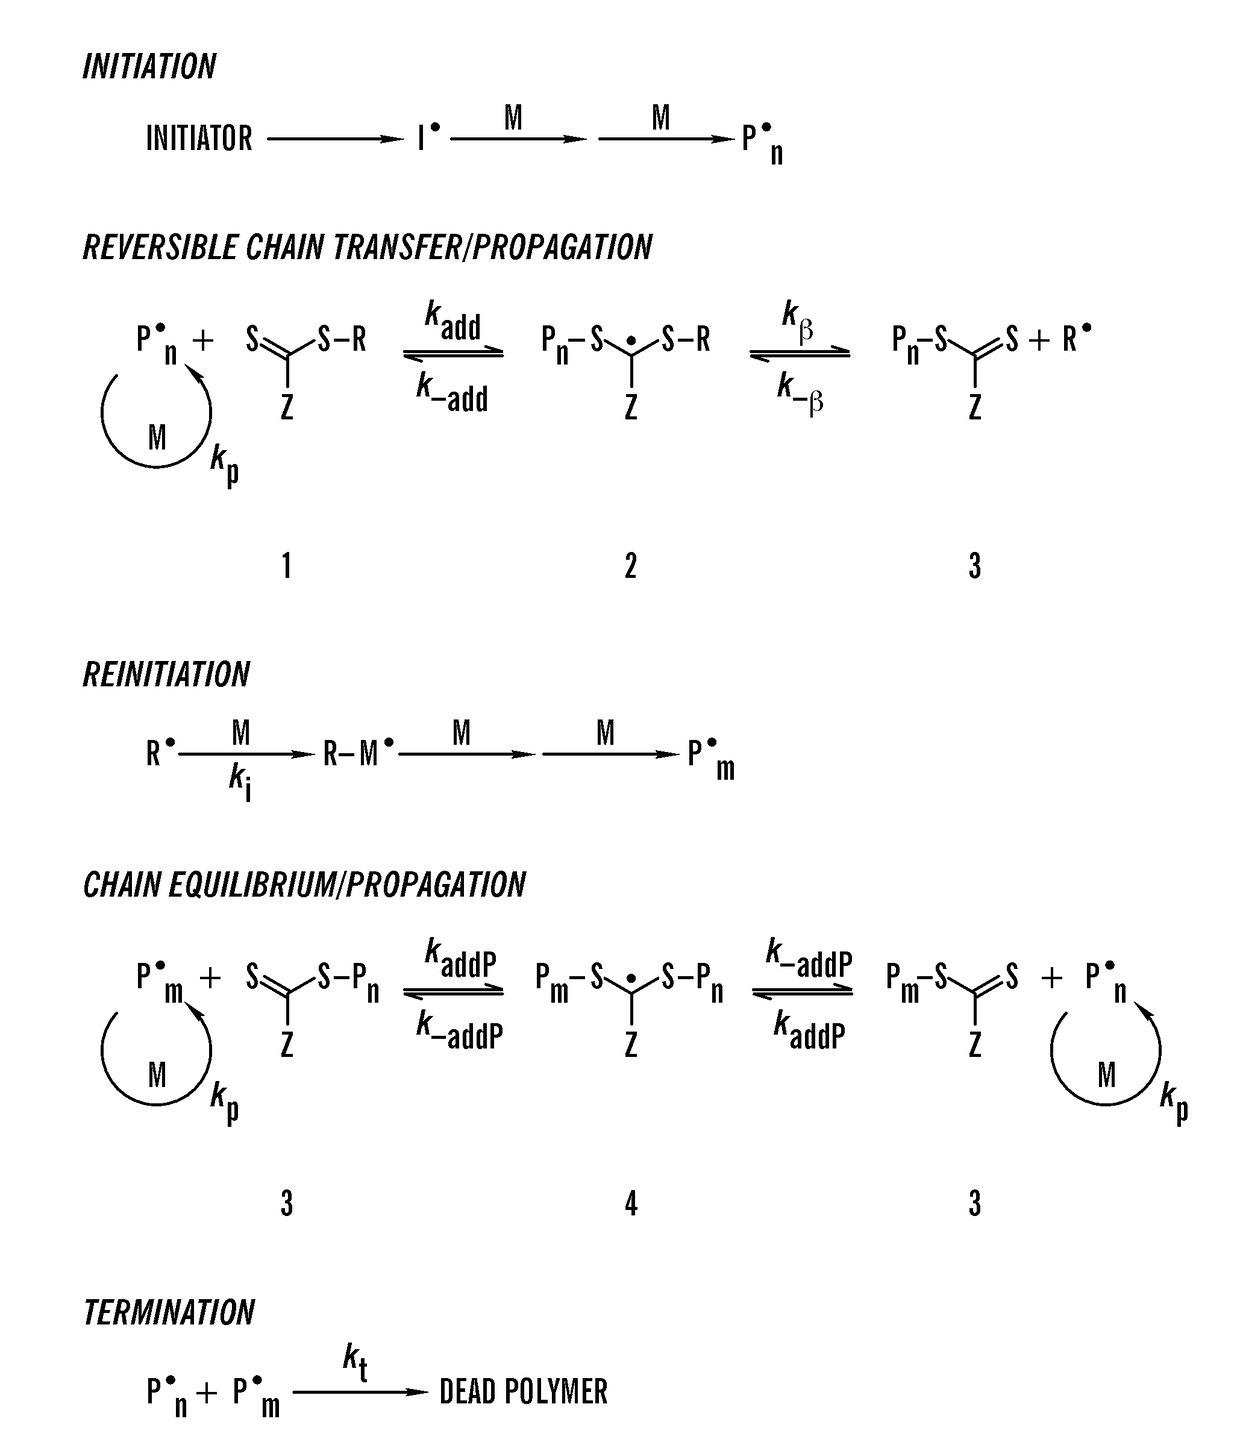 Thermoplastic elastomers via reversible addition-fragmentation chain transfer polymerization of triglycerides